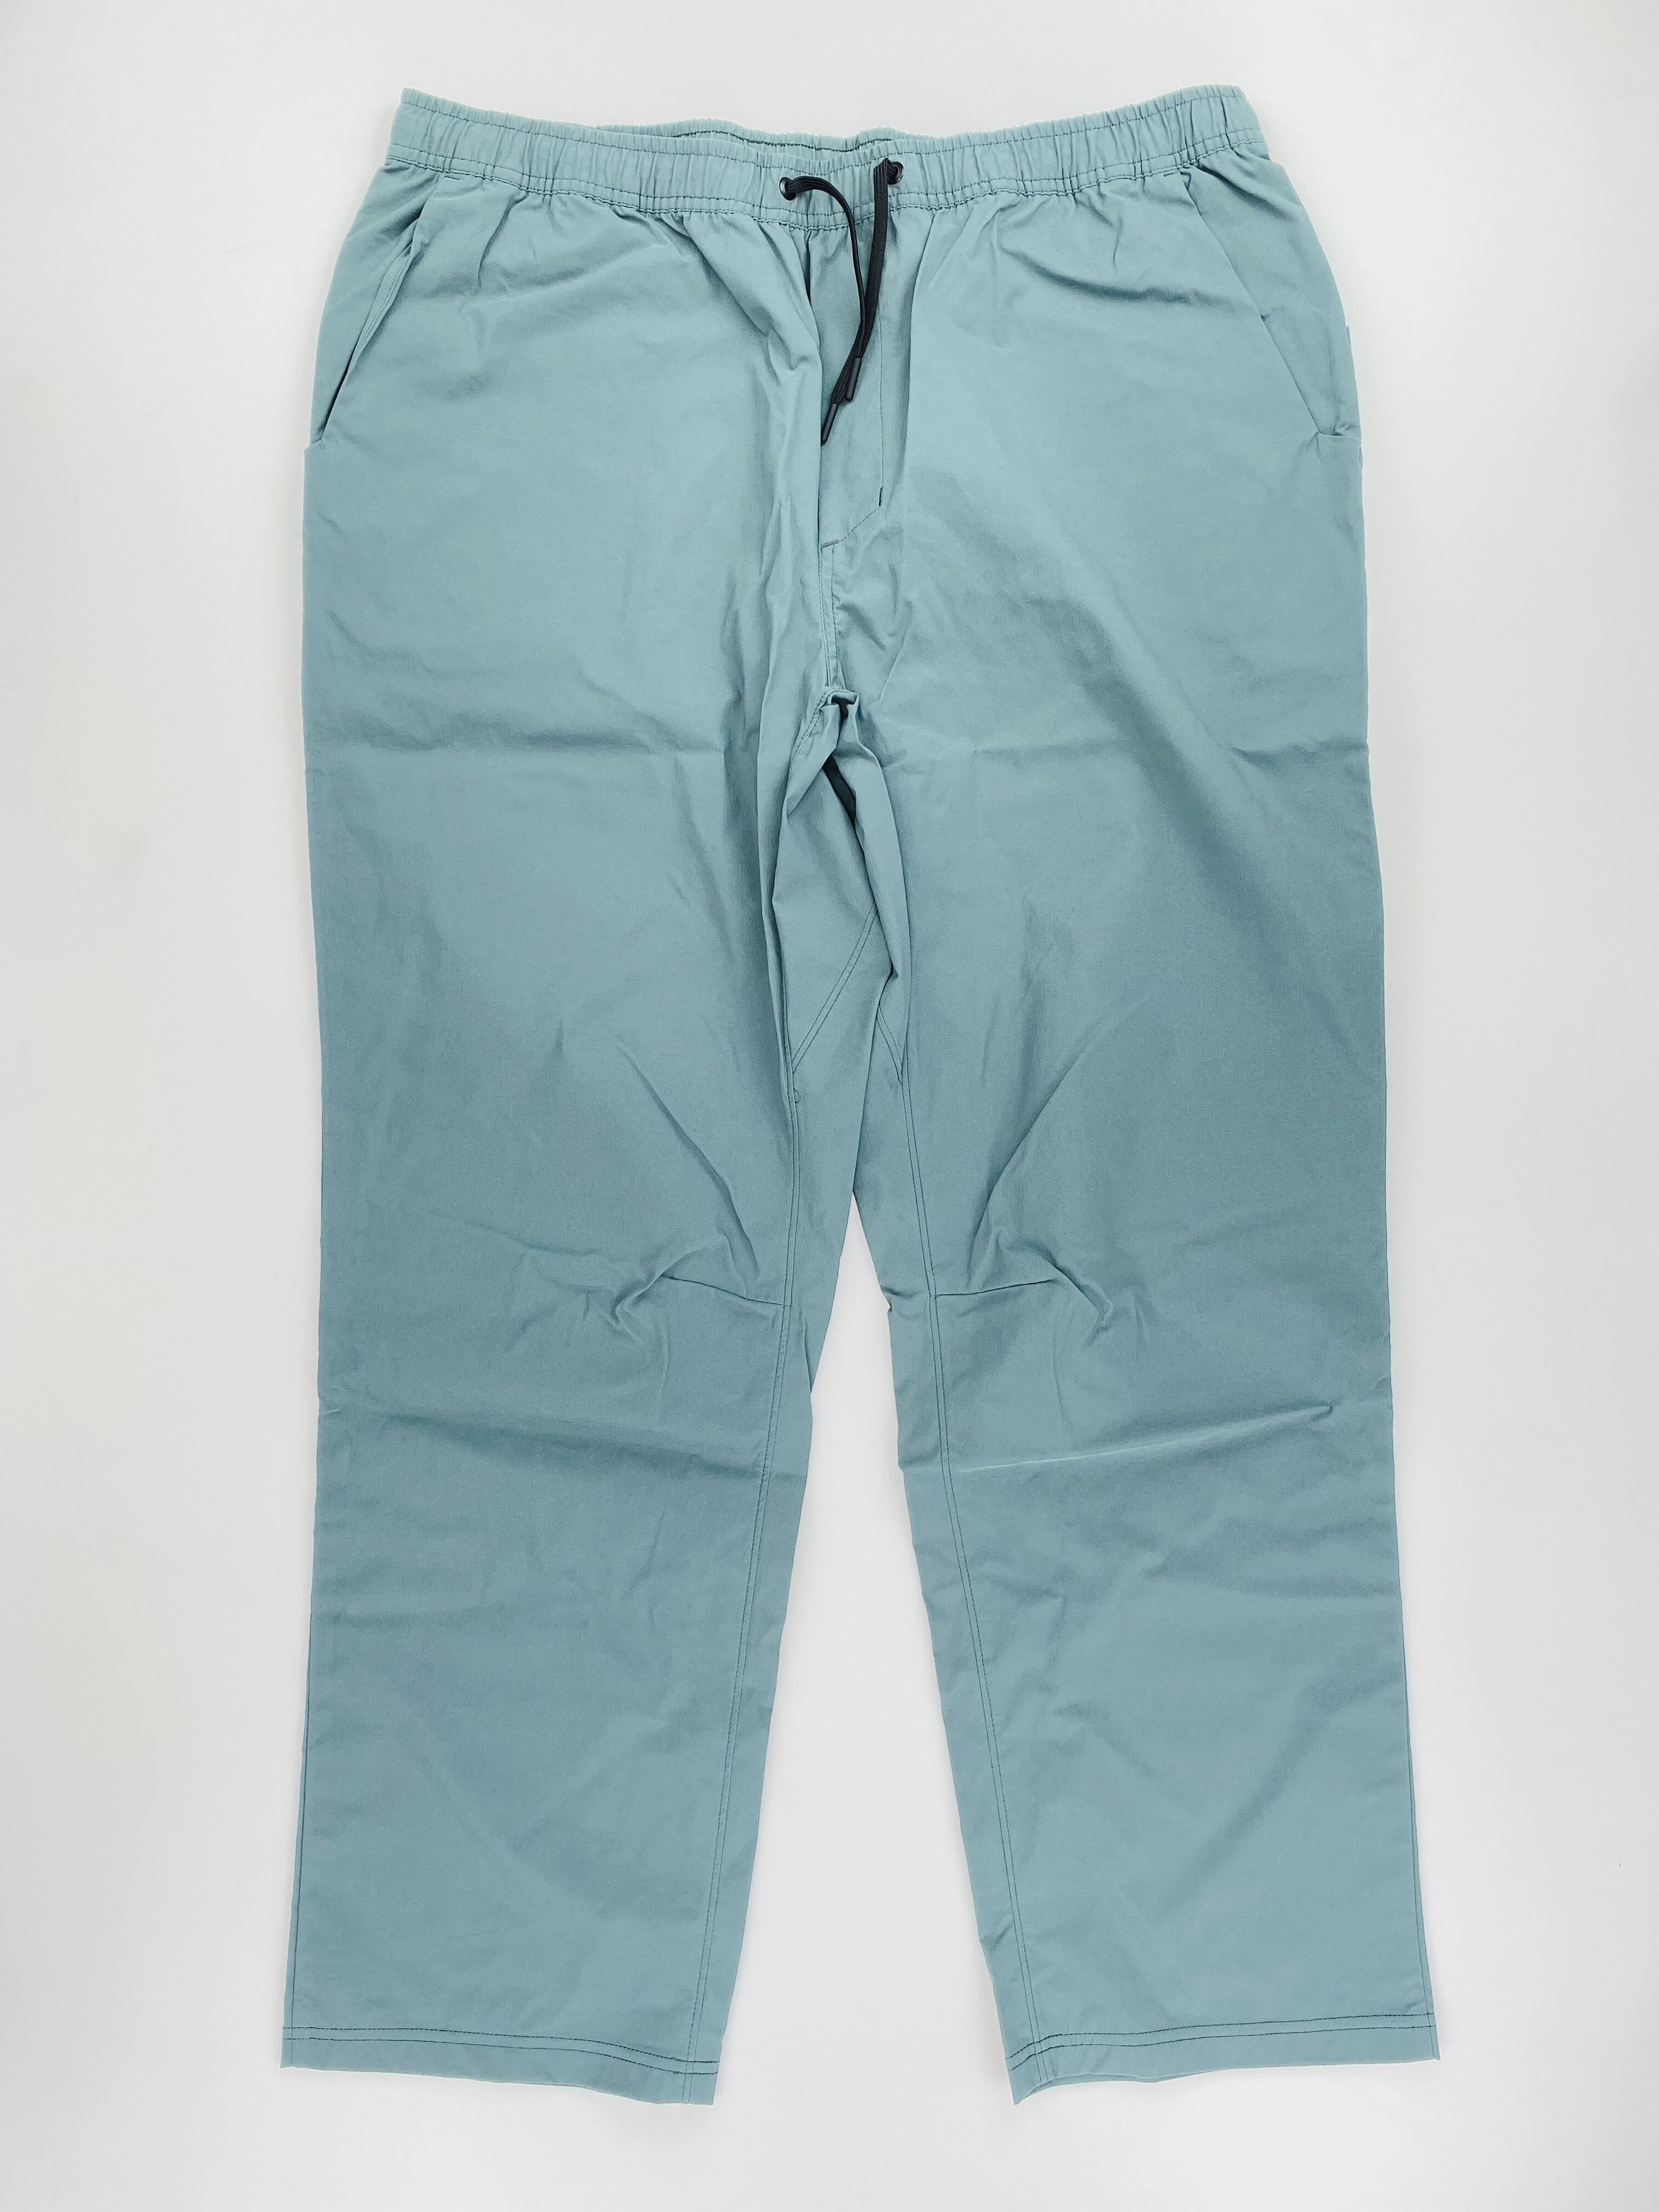 Mountain Hardwear Basin™ Pull-On Man Pant Regular - Seconde main Pantalon randonnée homme - Vert - XXL | Hardloop